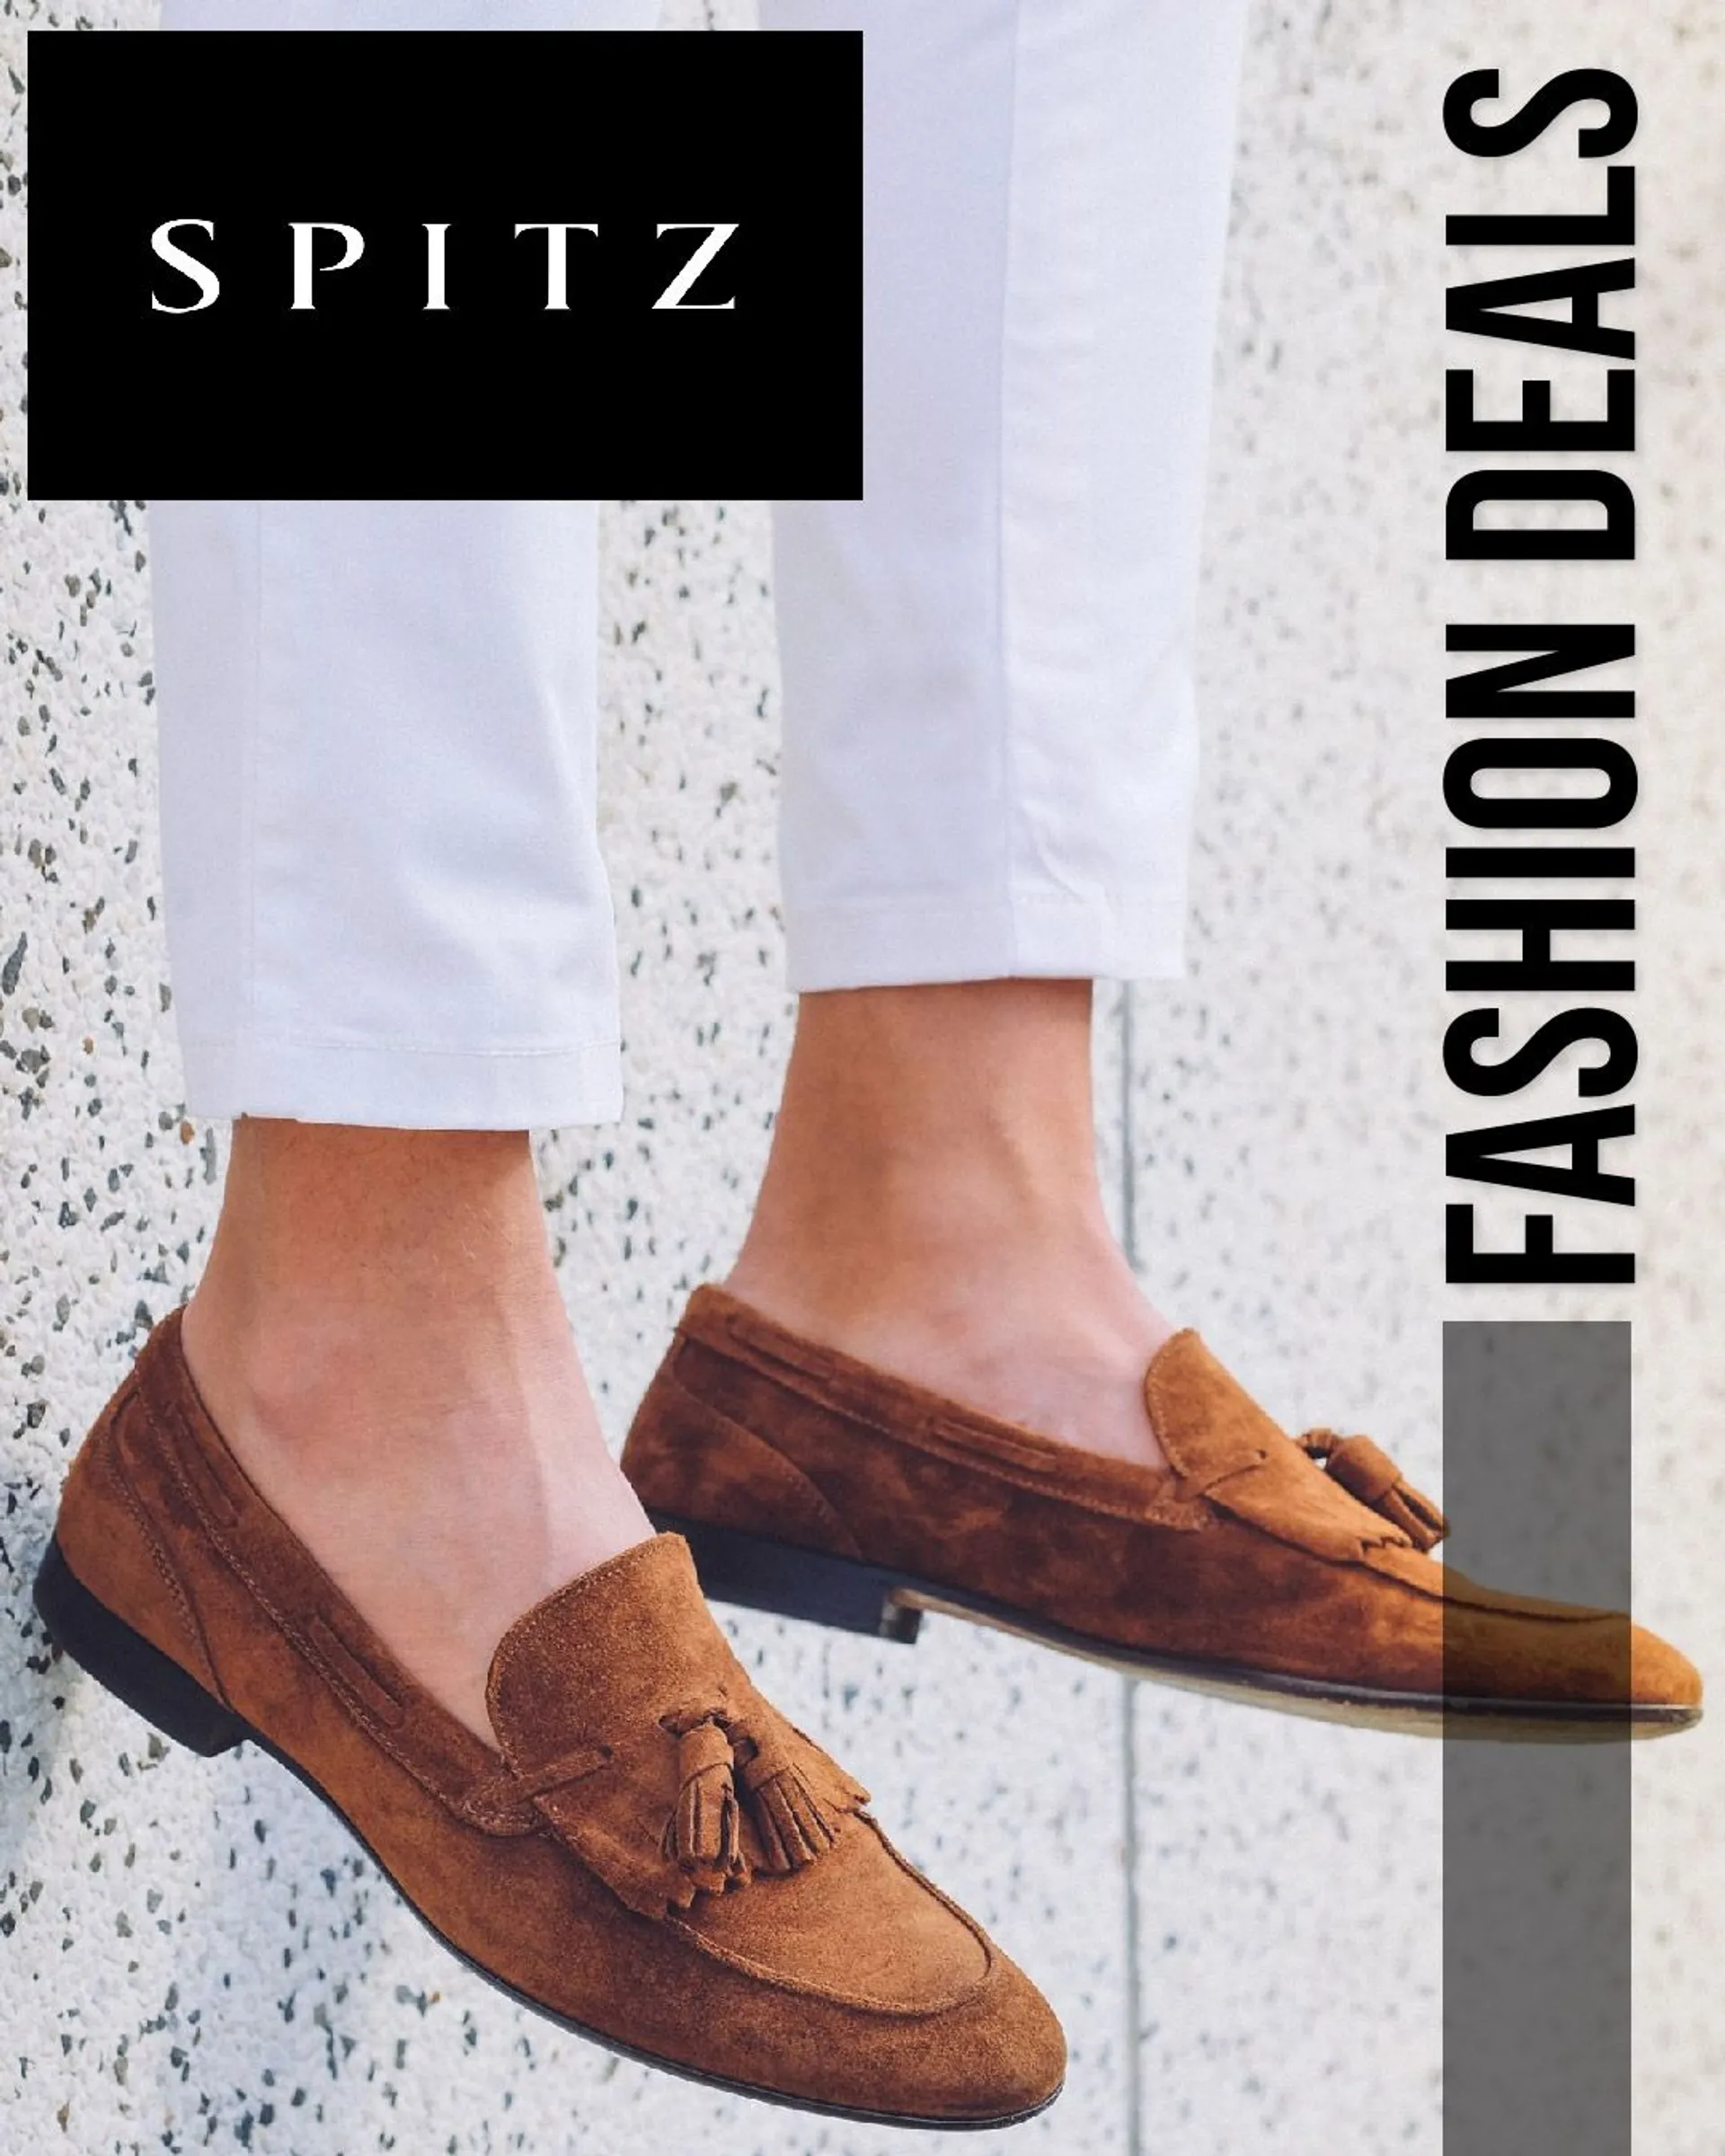 Spitz - Fashion Men